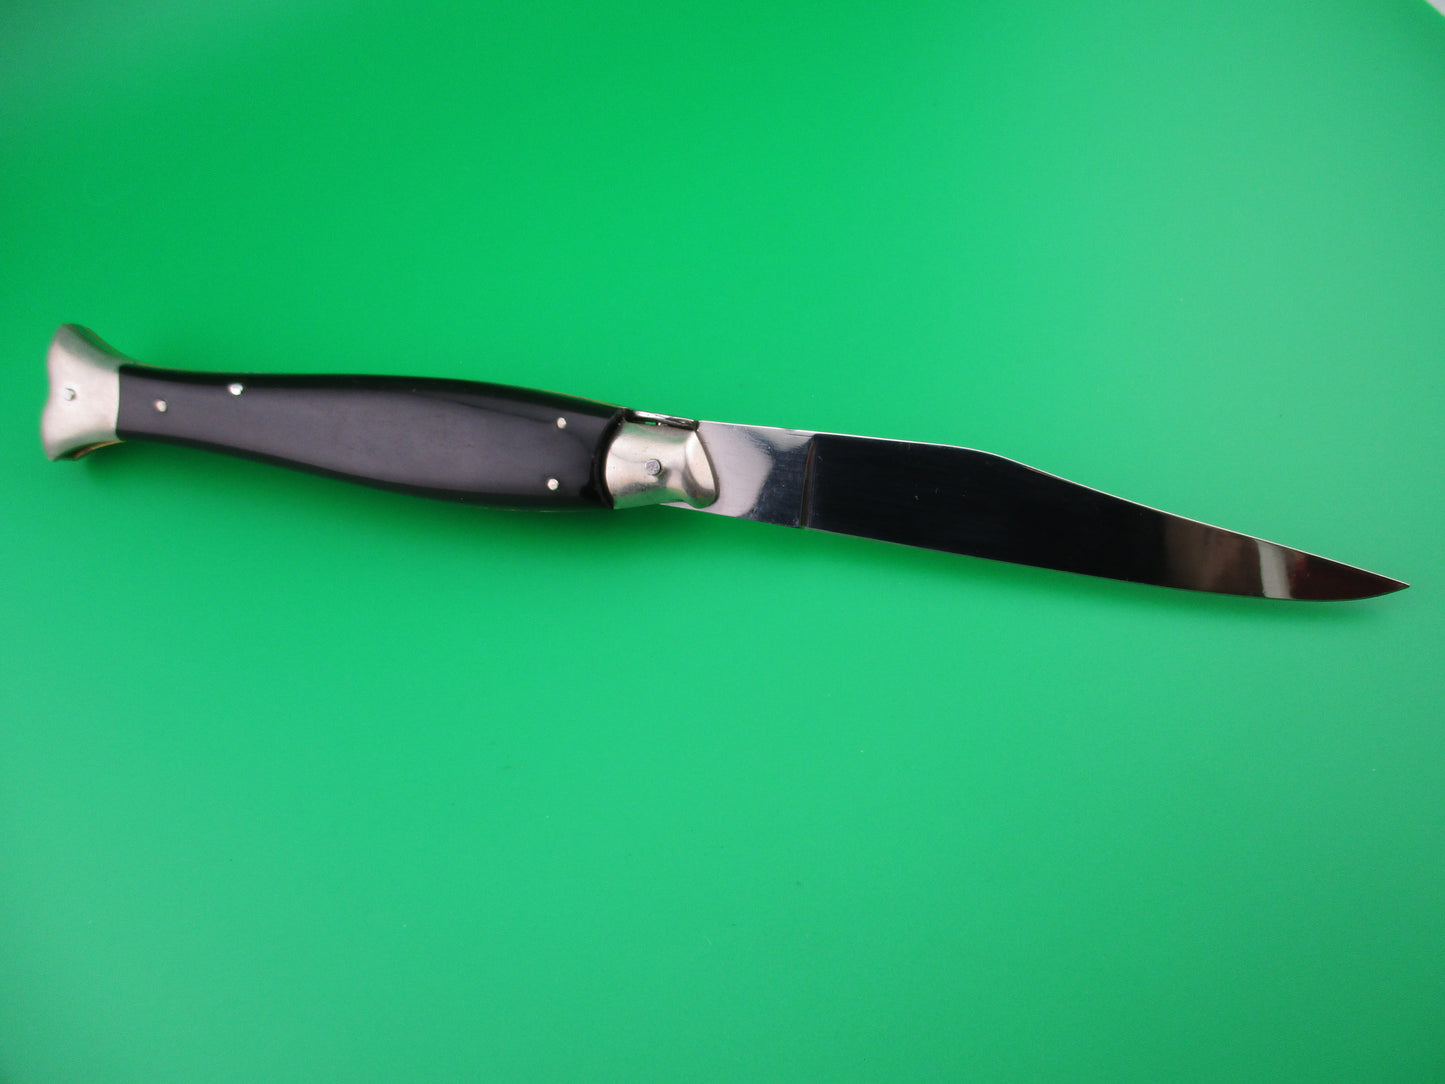 AGA CAMPOLIN MANIAGO ITALY 25cm 2011 Fishtail Horn picklock knife